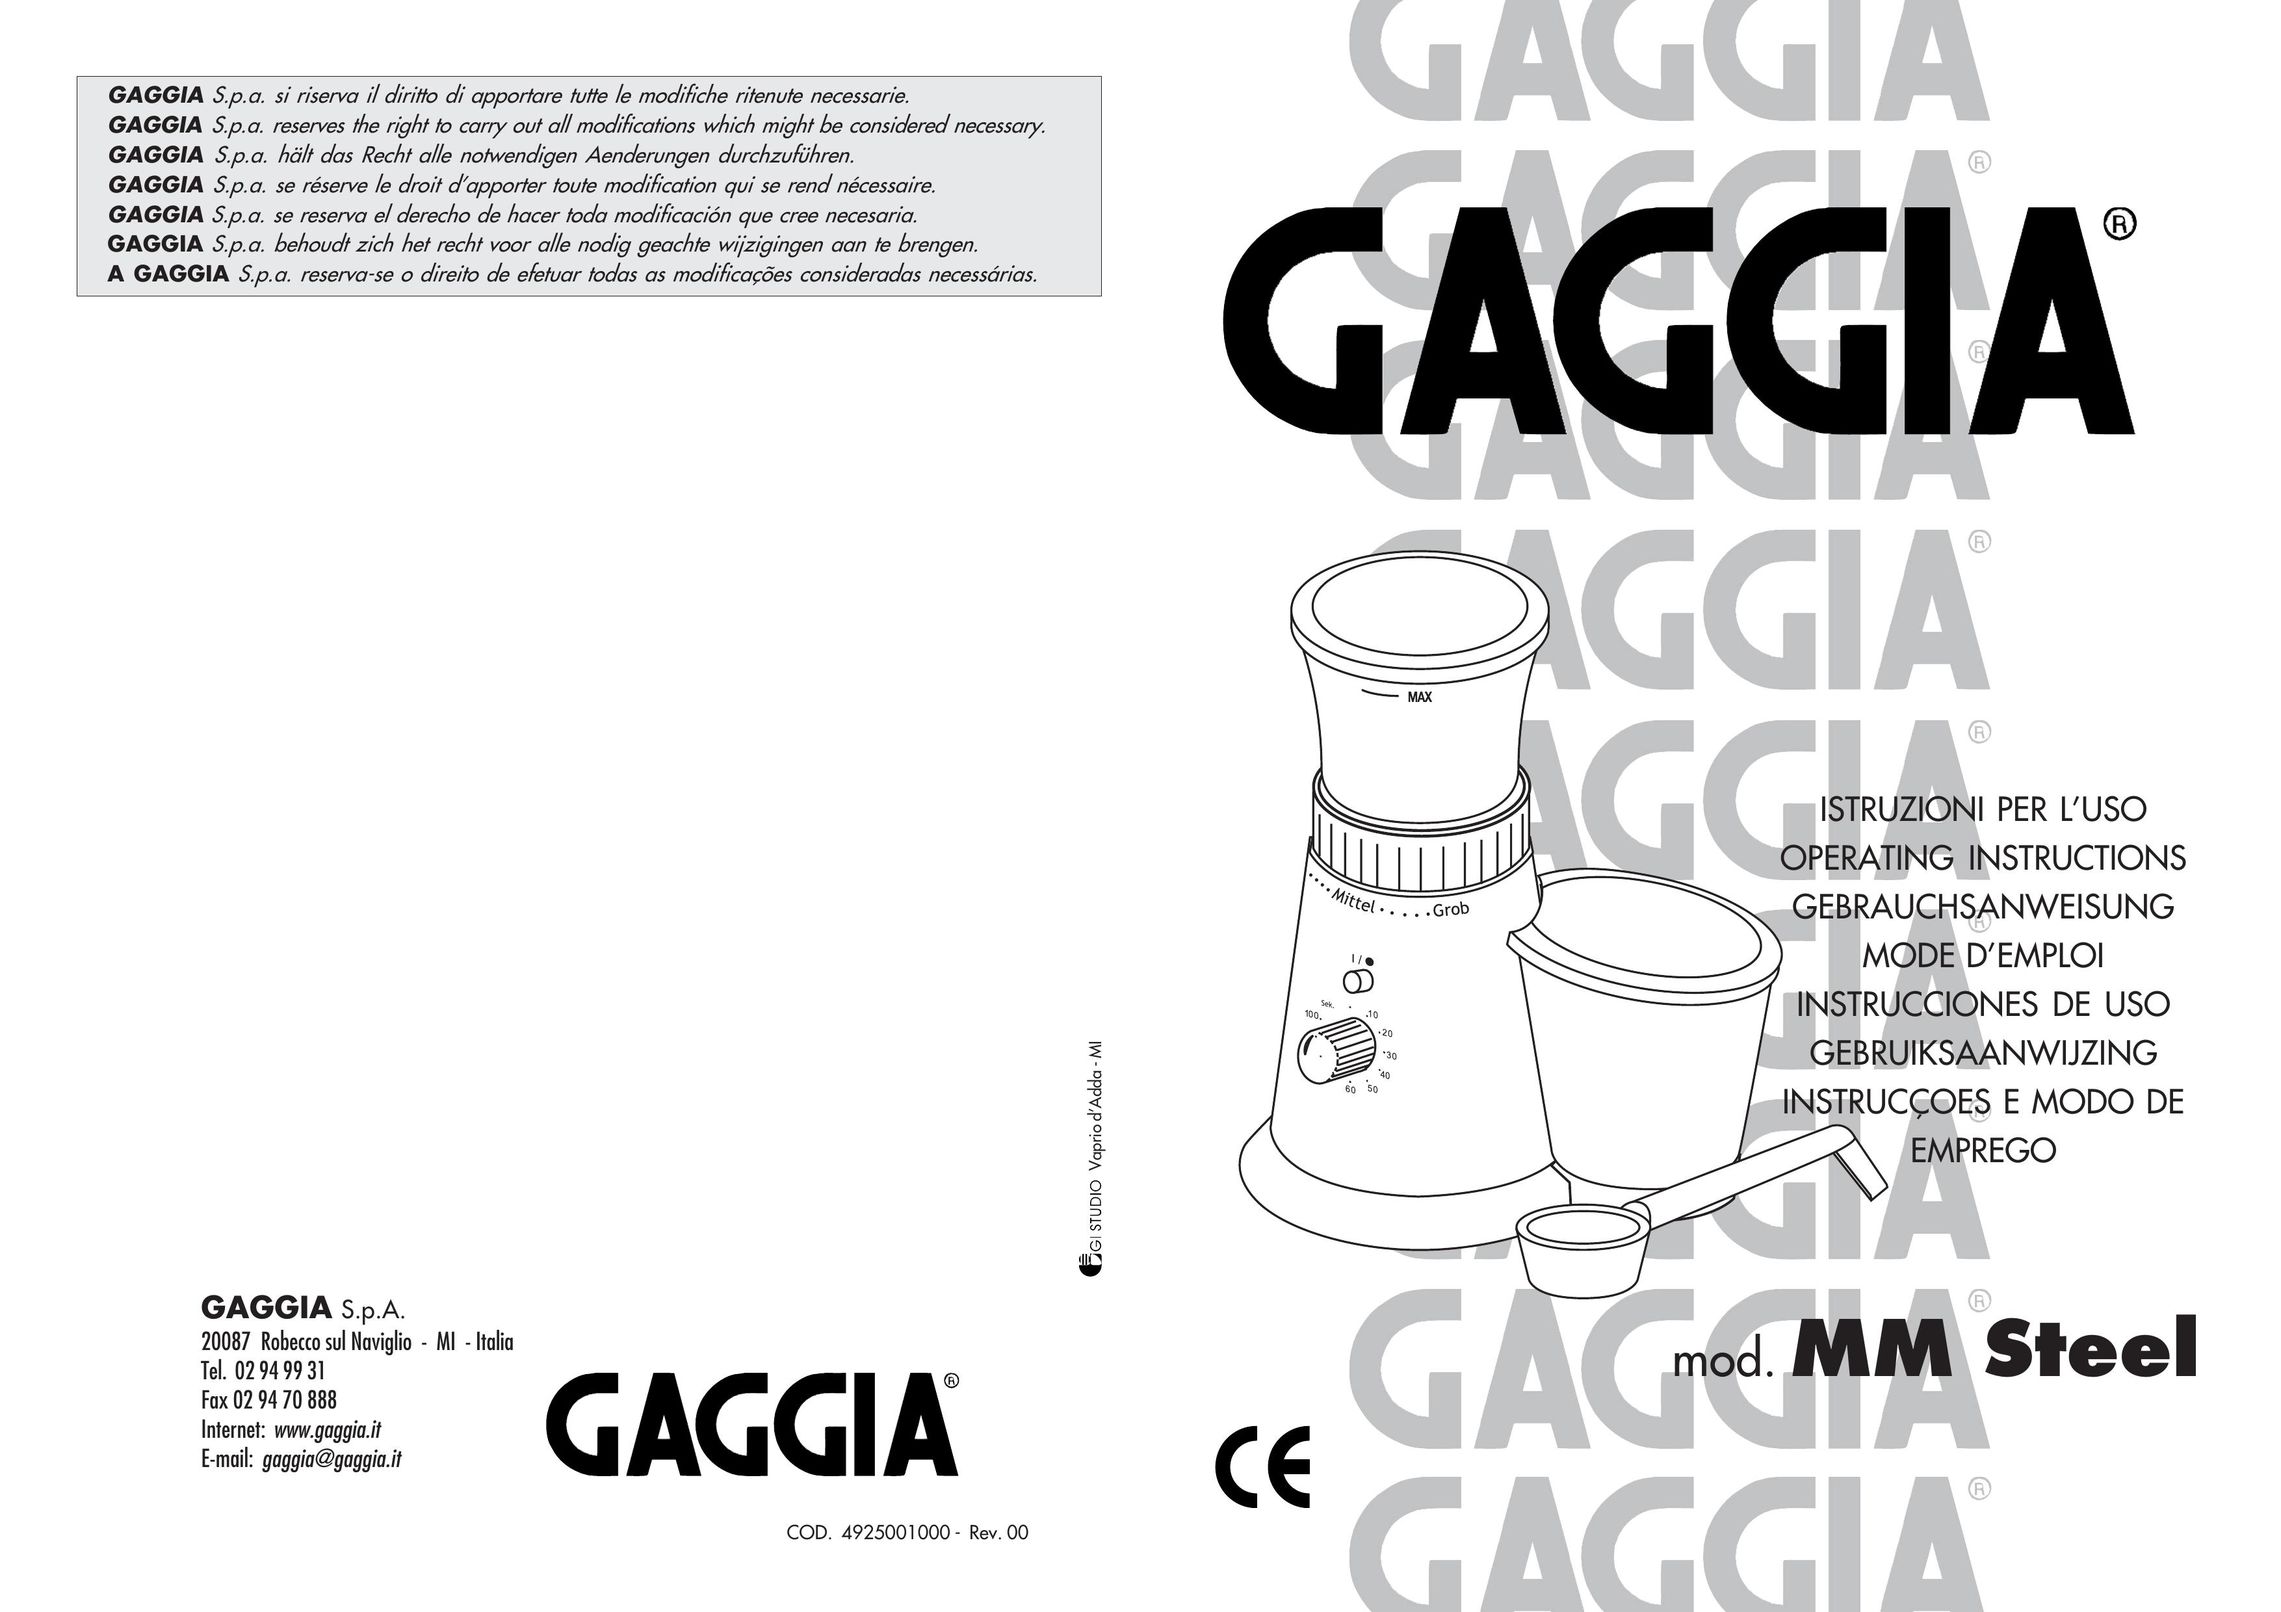 Gaggia Coffee Grinder Mod. MM Steel Coffee Grinder User Manual